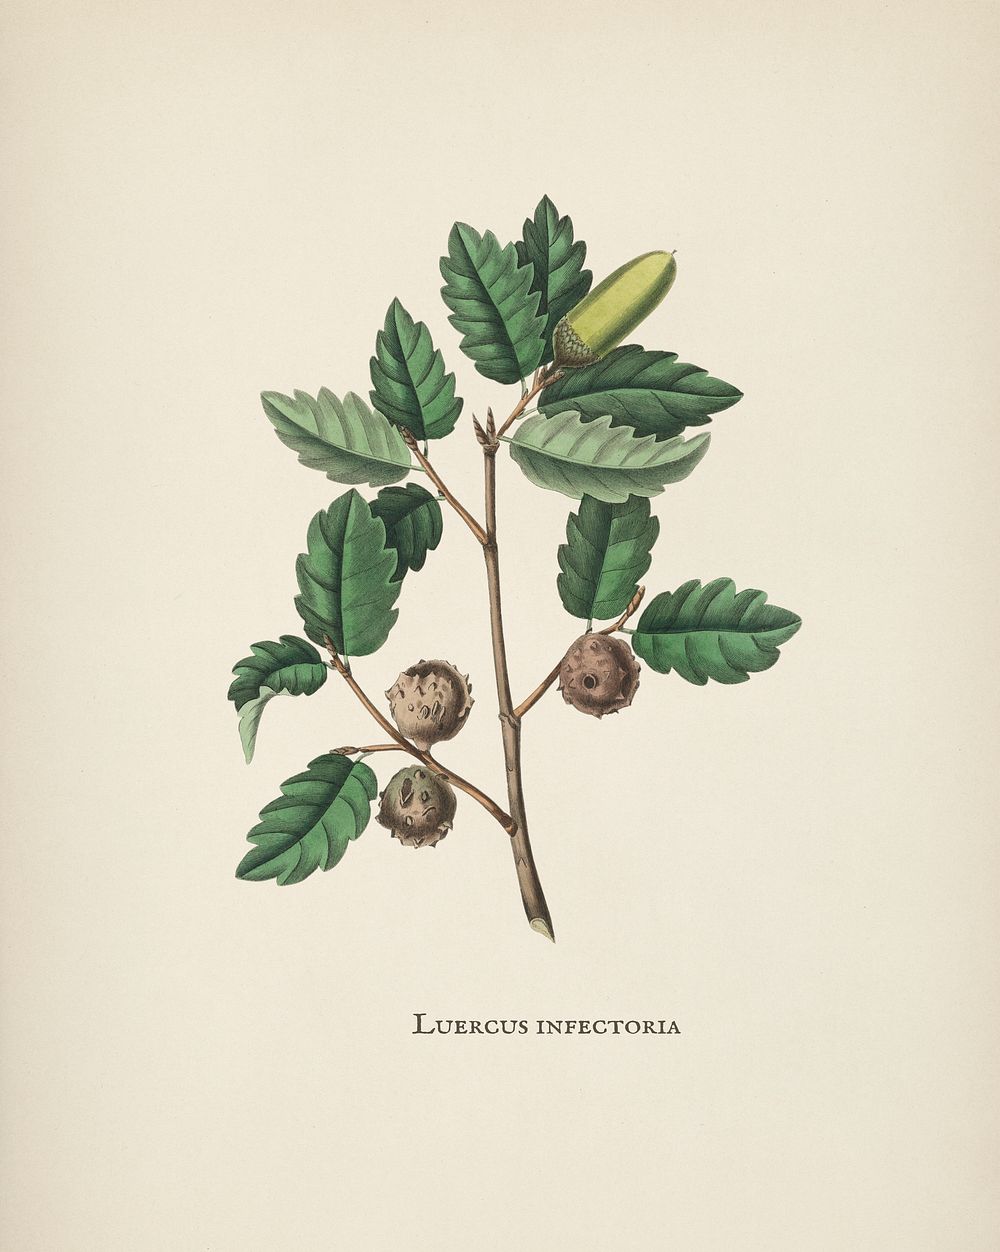 Aleppo oak (Luercus infectoria) illustration from Medical Botany (1836) by John Stephenson and James Morss Churchill.